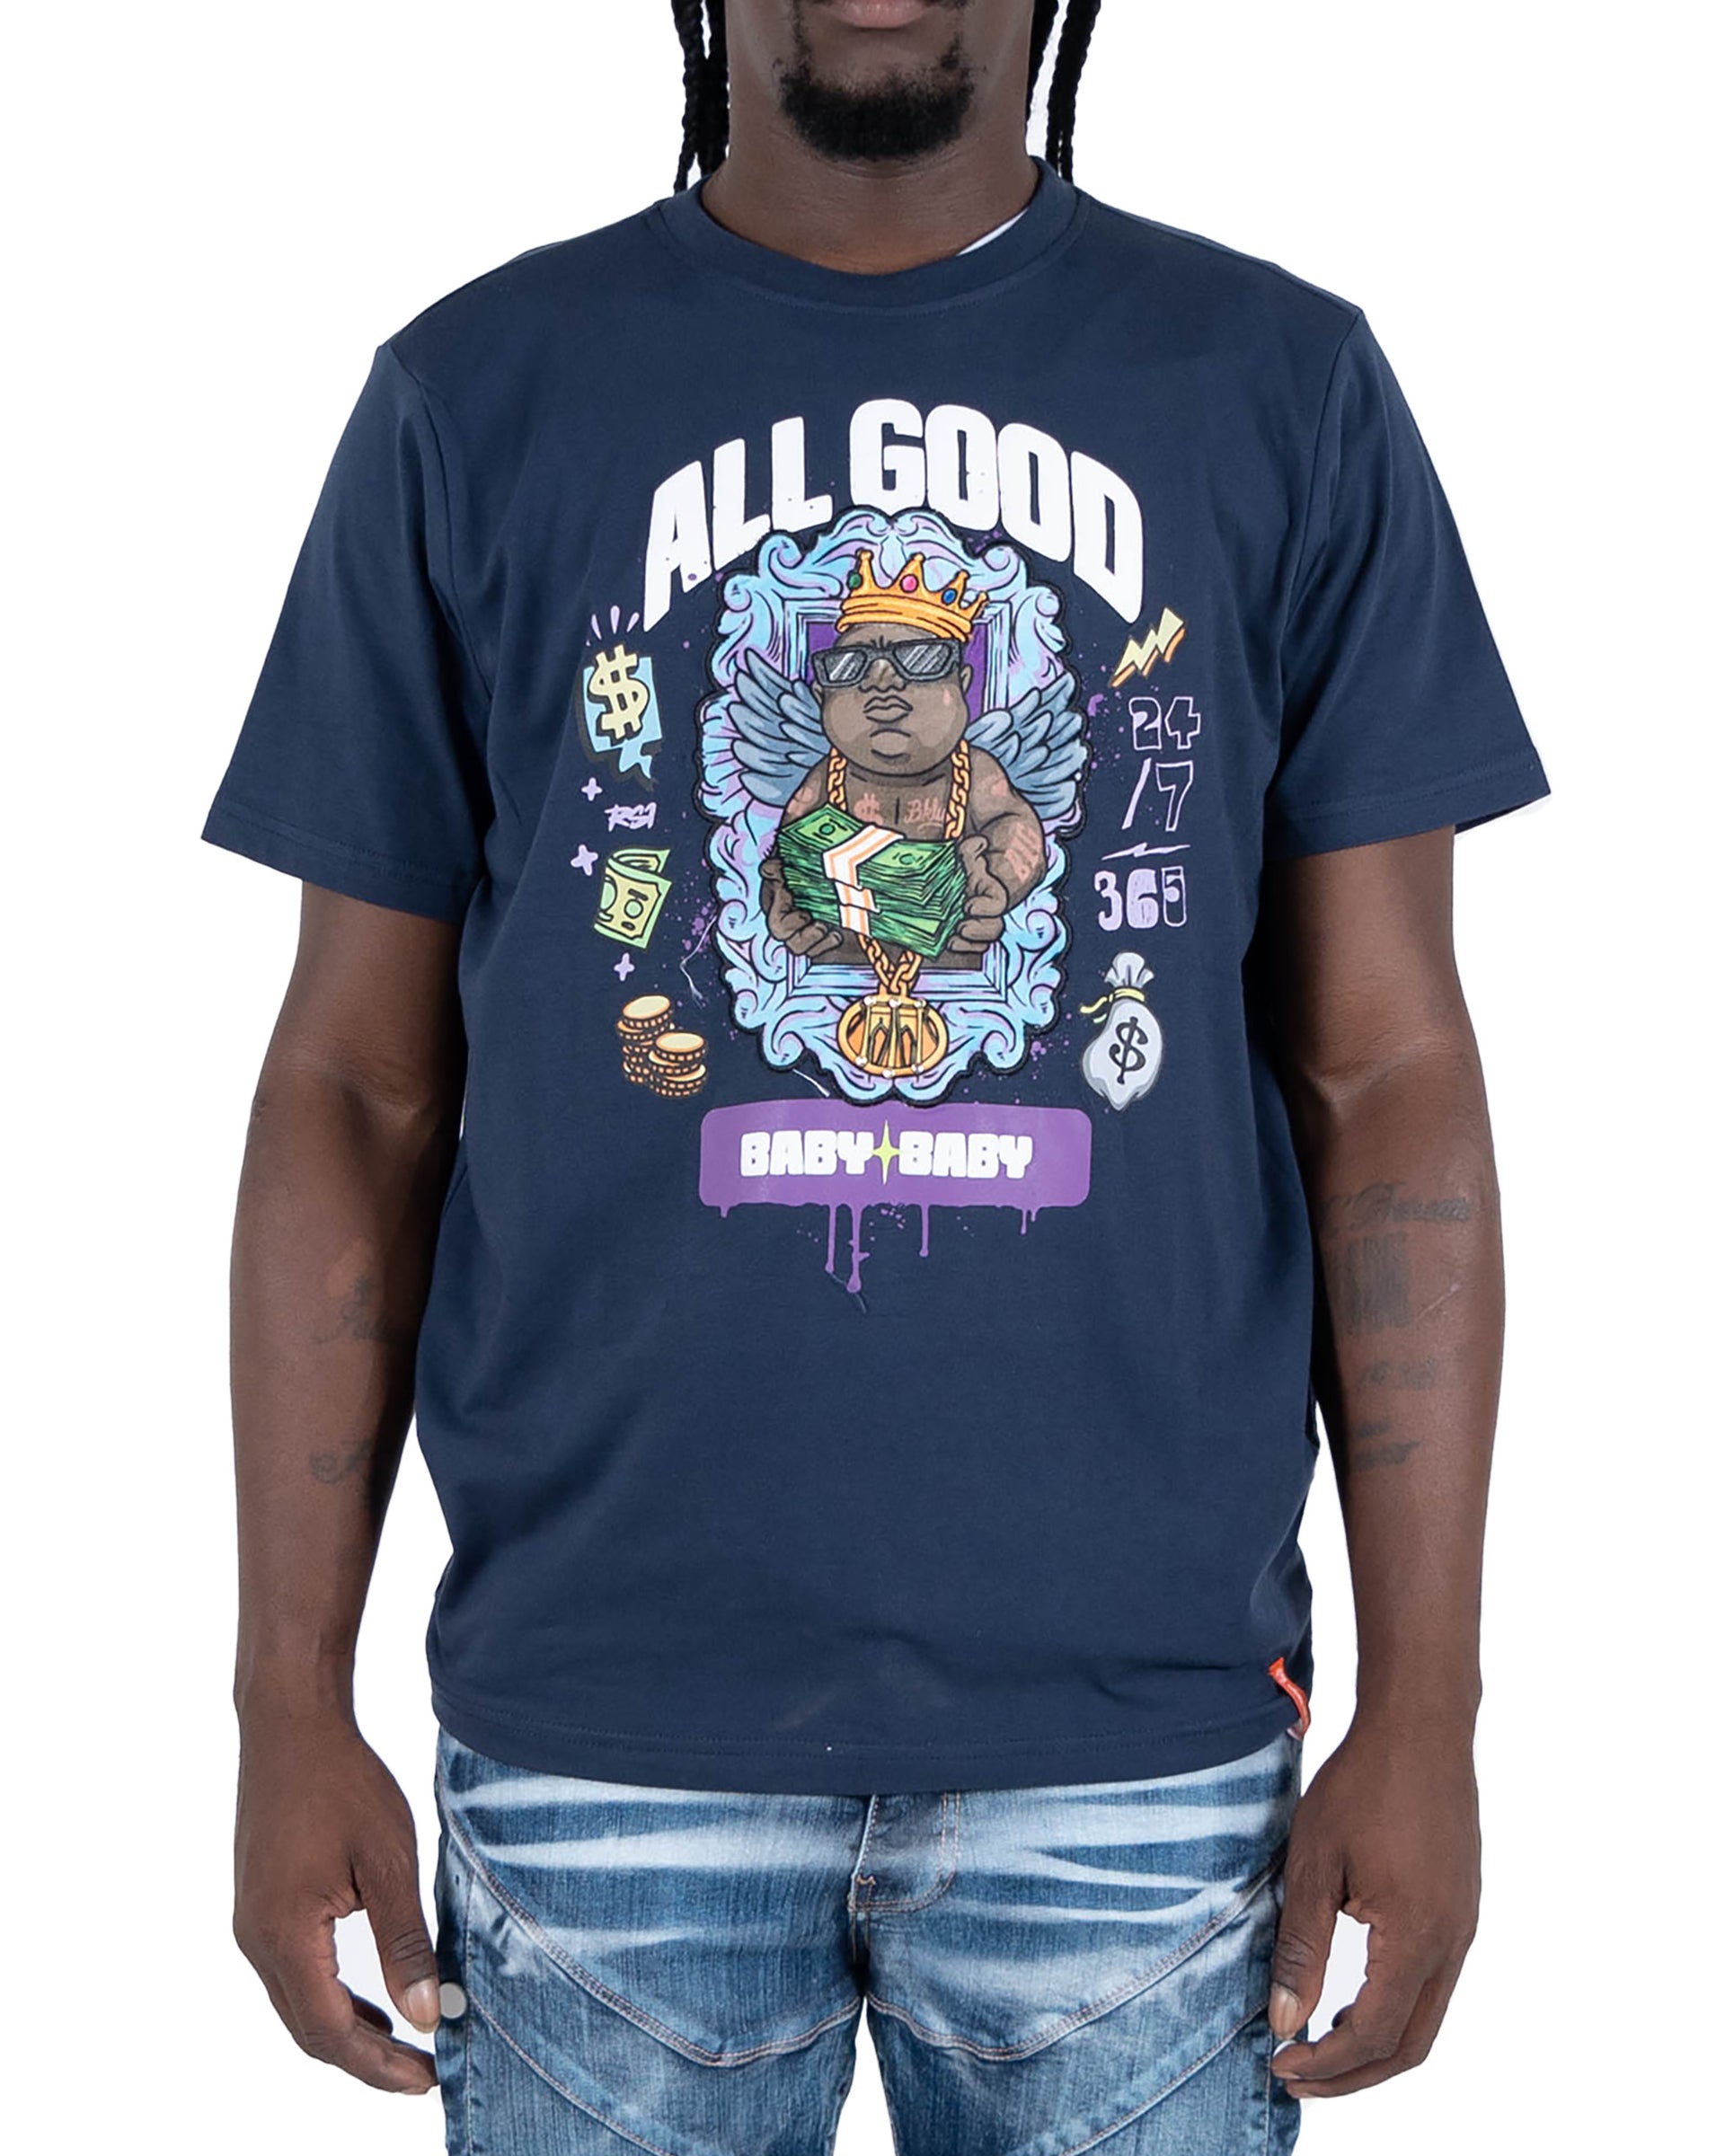 Men's "All Good" Graphic T-Shirt | Navy